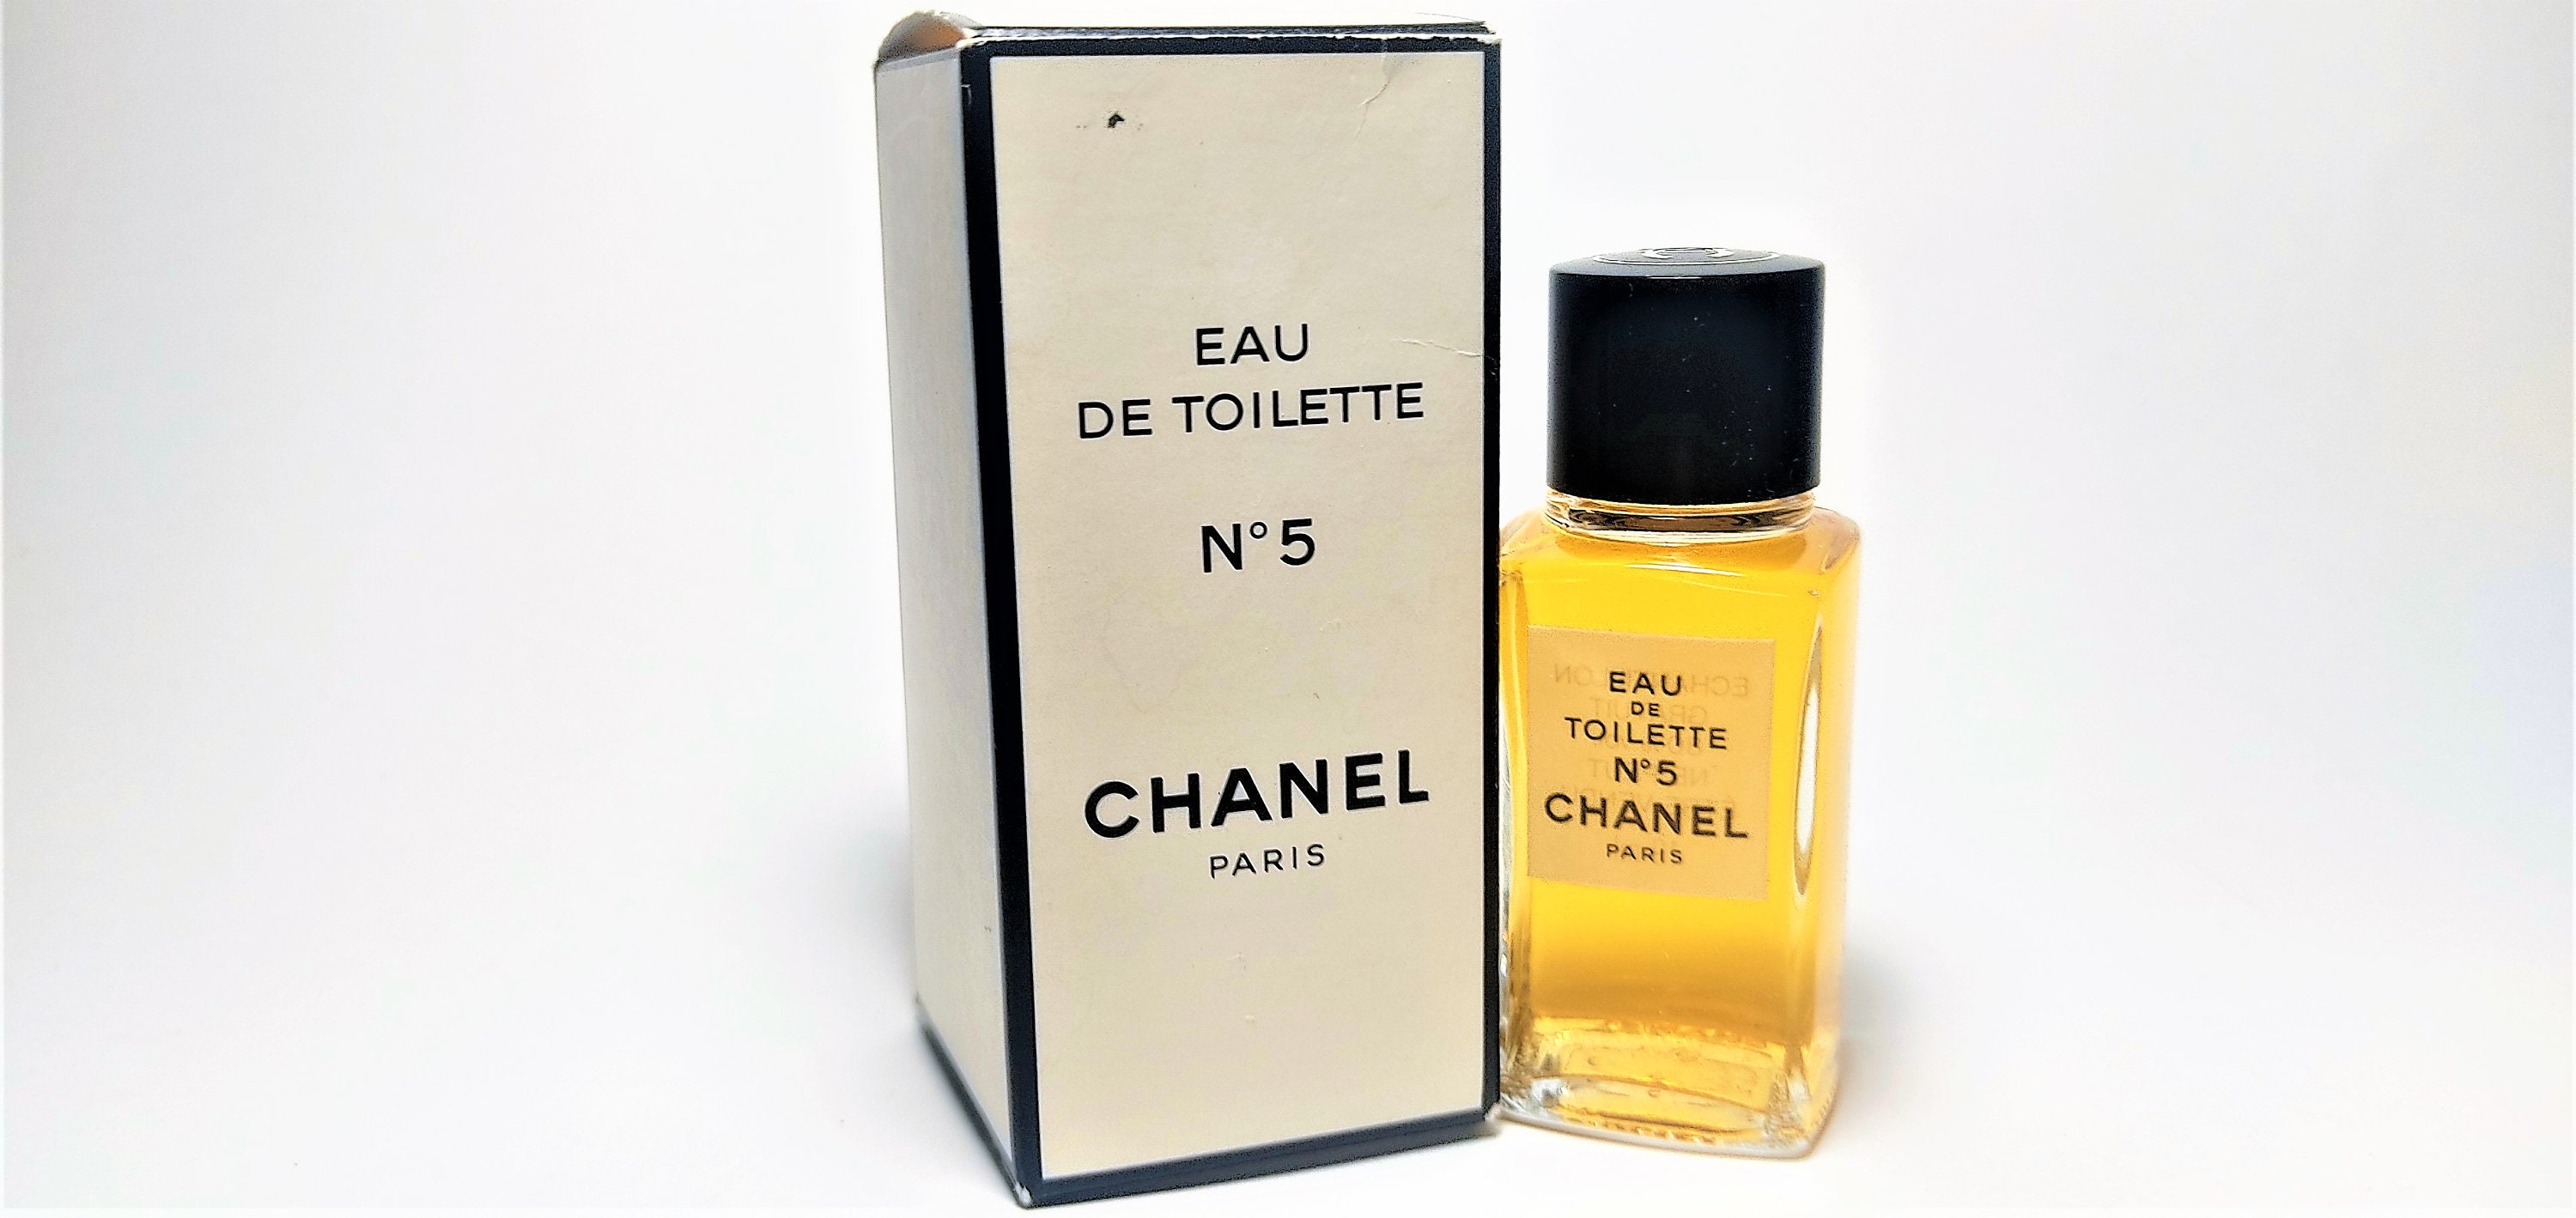 CHANEL No 19 Eau De Parfum Spray 3.4 fl oz/100 ml RARE Read Descr